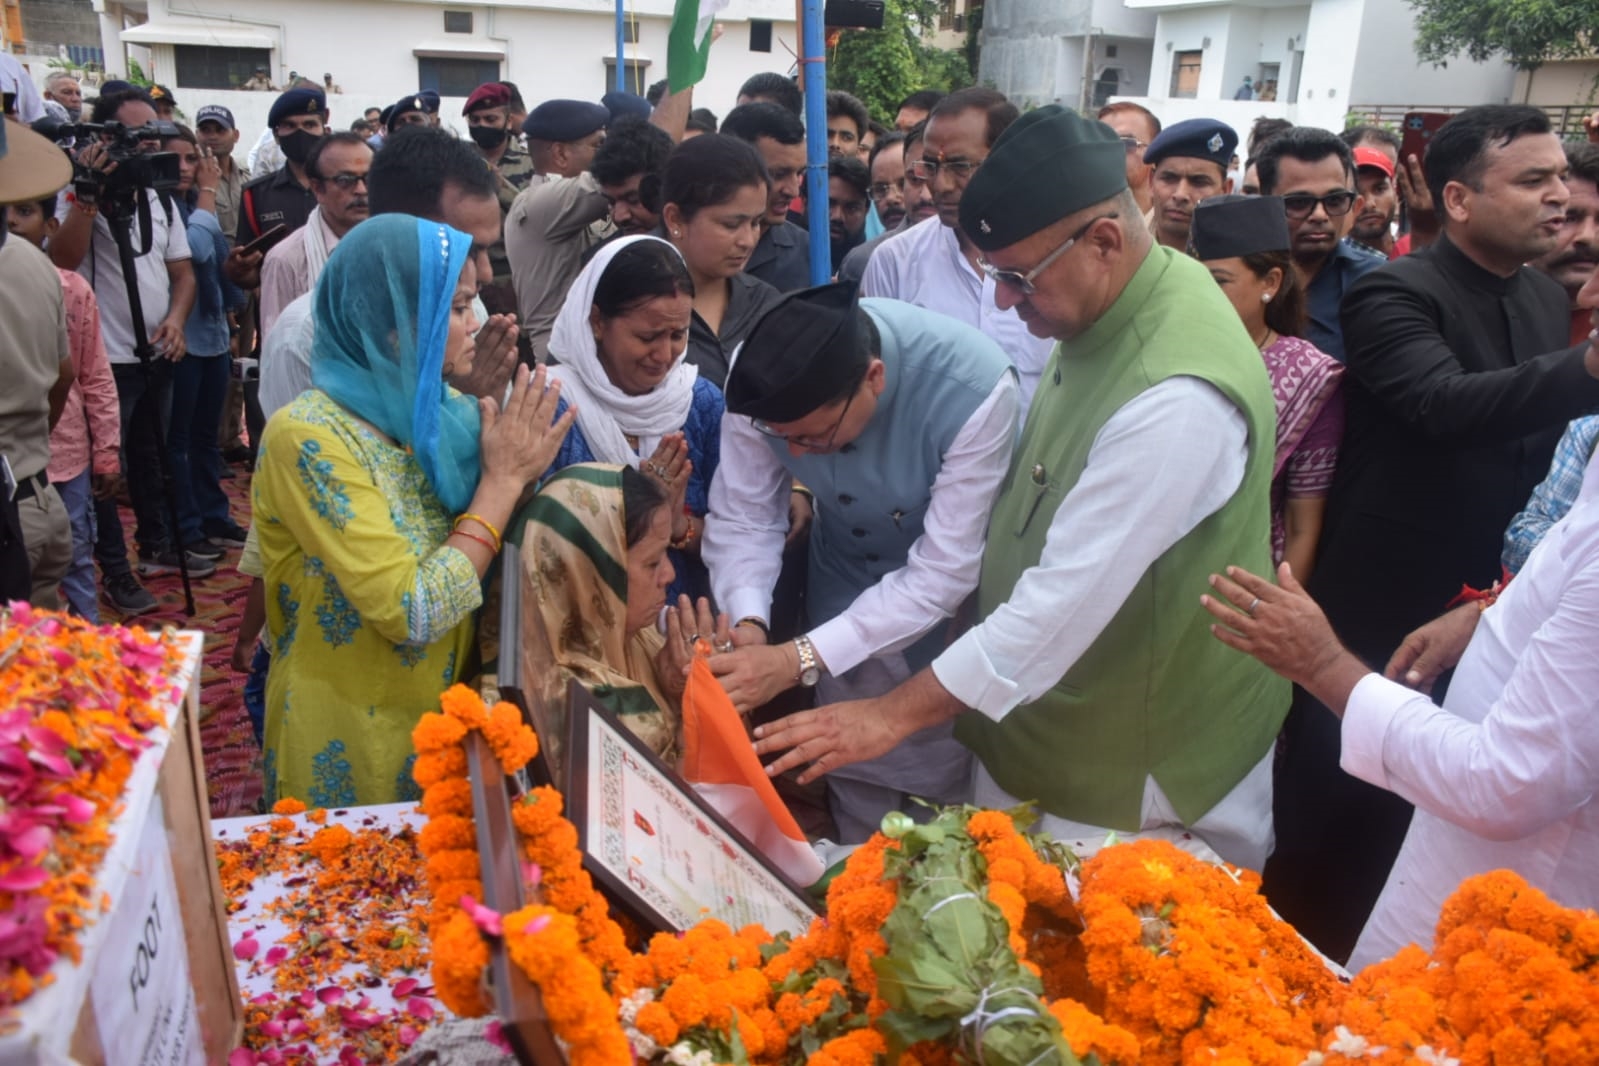 martyr-chandrashekhar-cremated-with-military-honors-in-uttarakhand